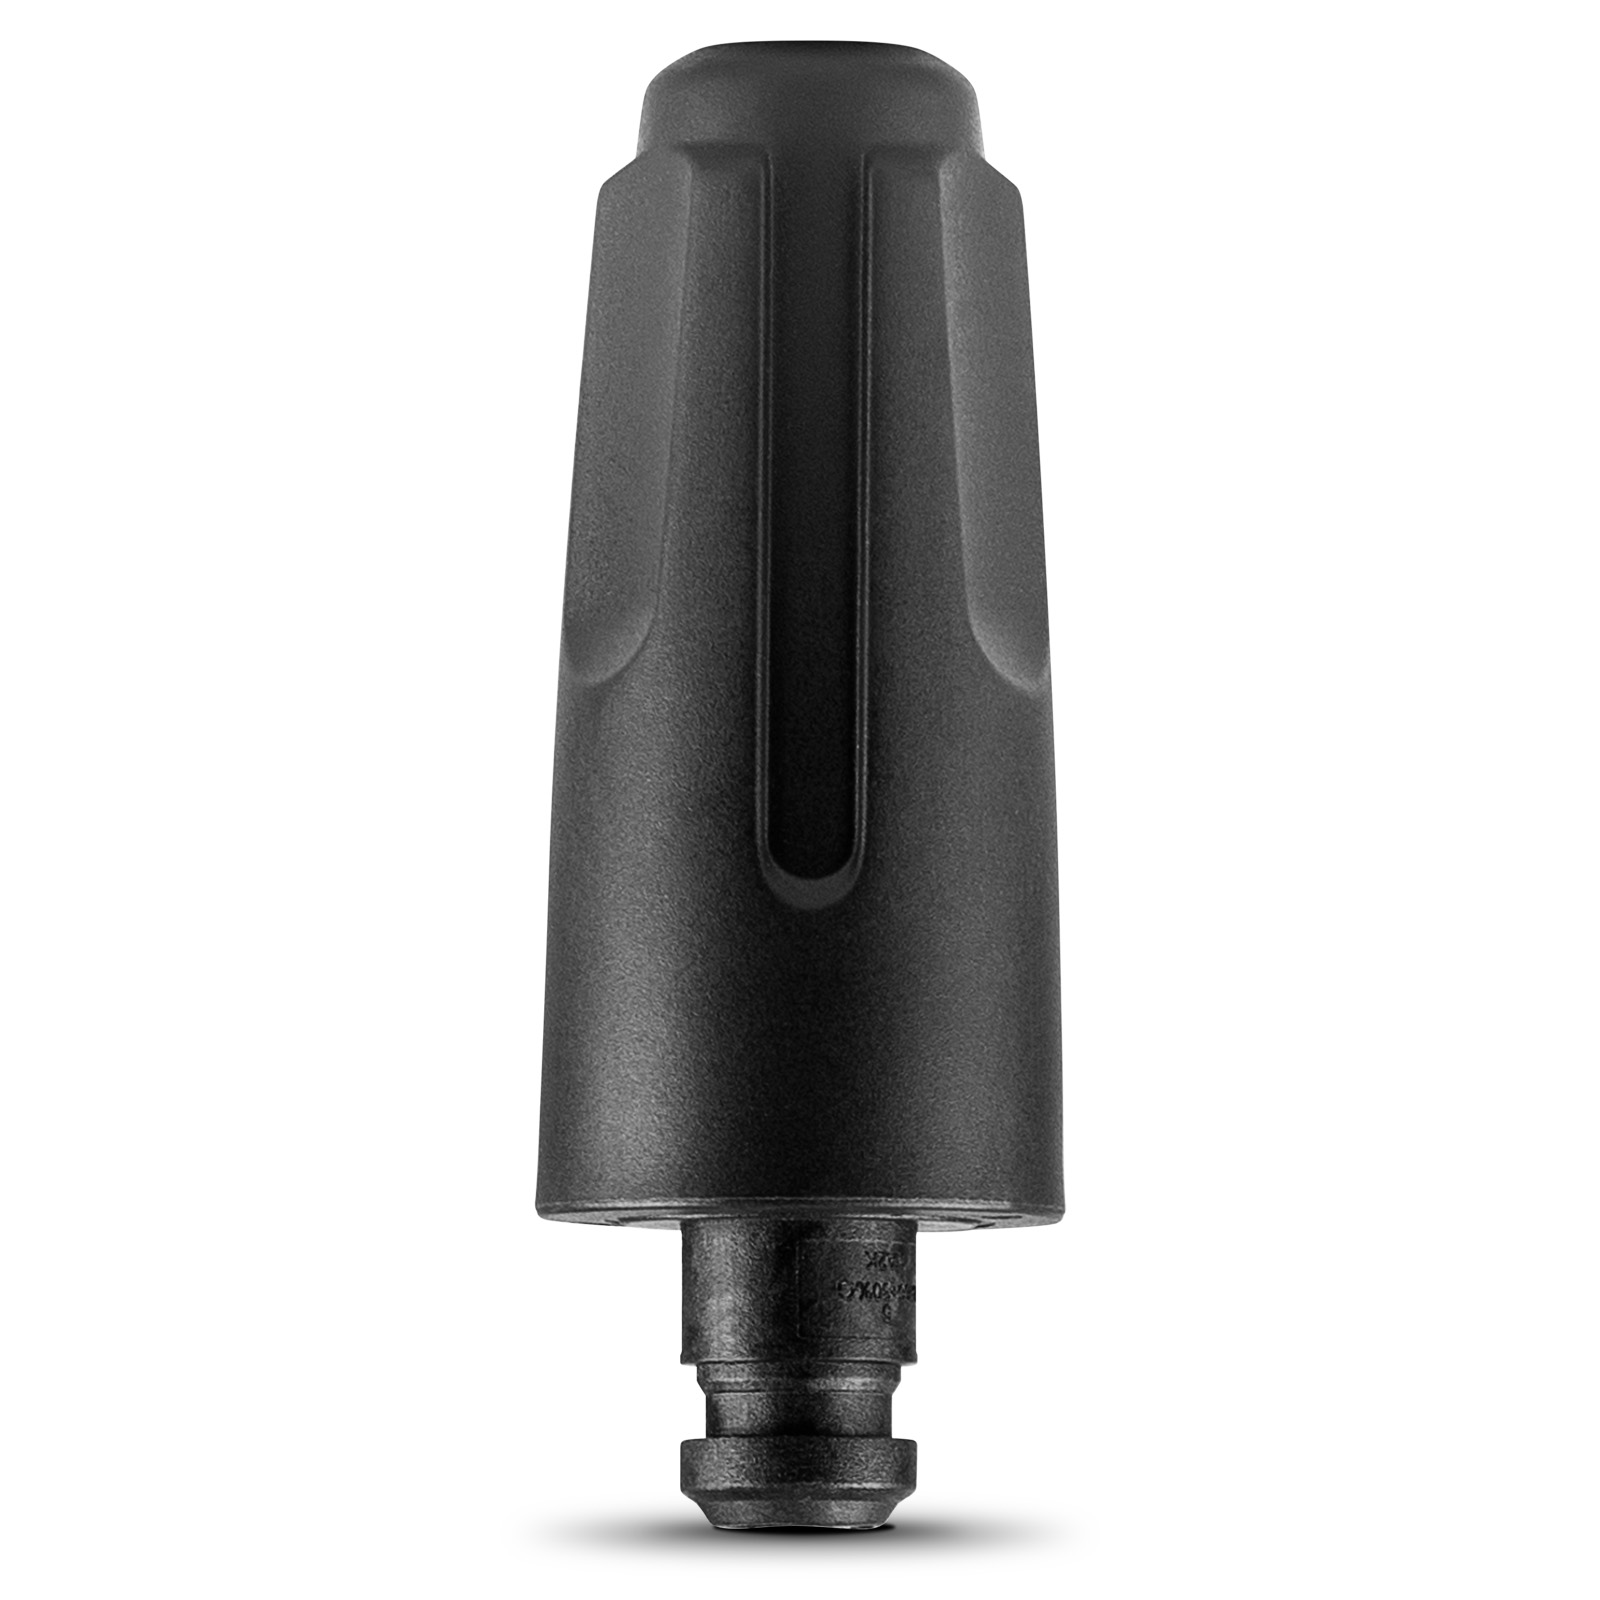 Gerni Jet Spray Nozzle - Profile